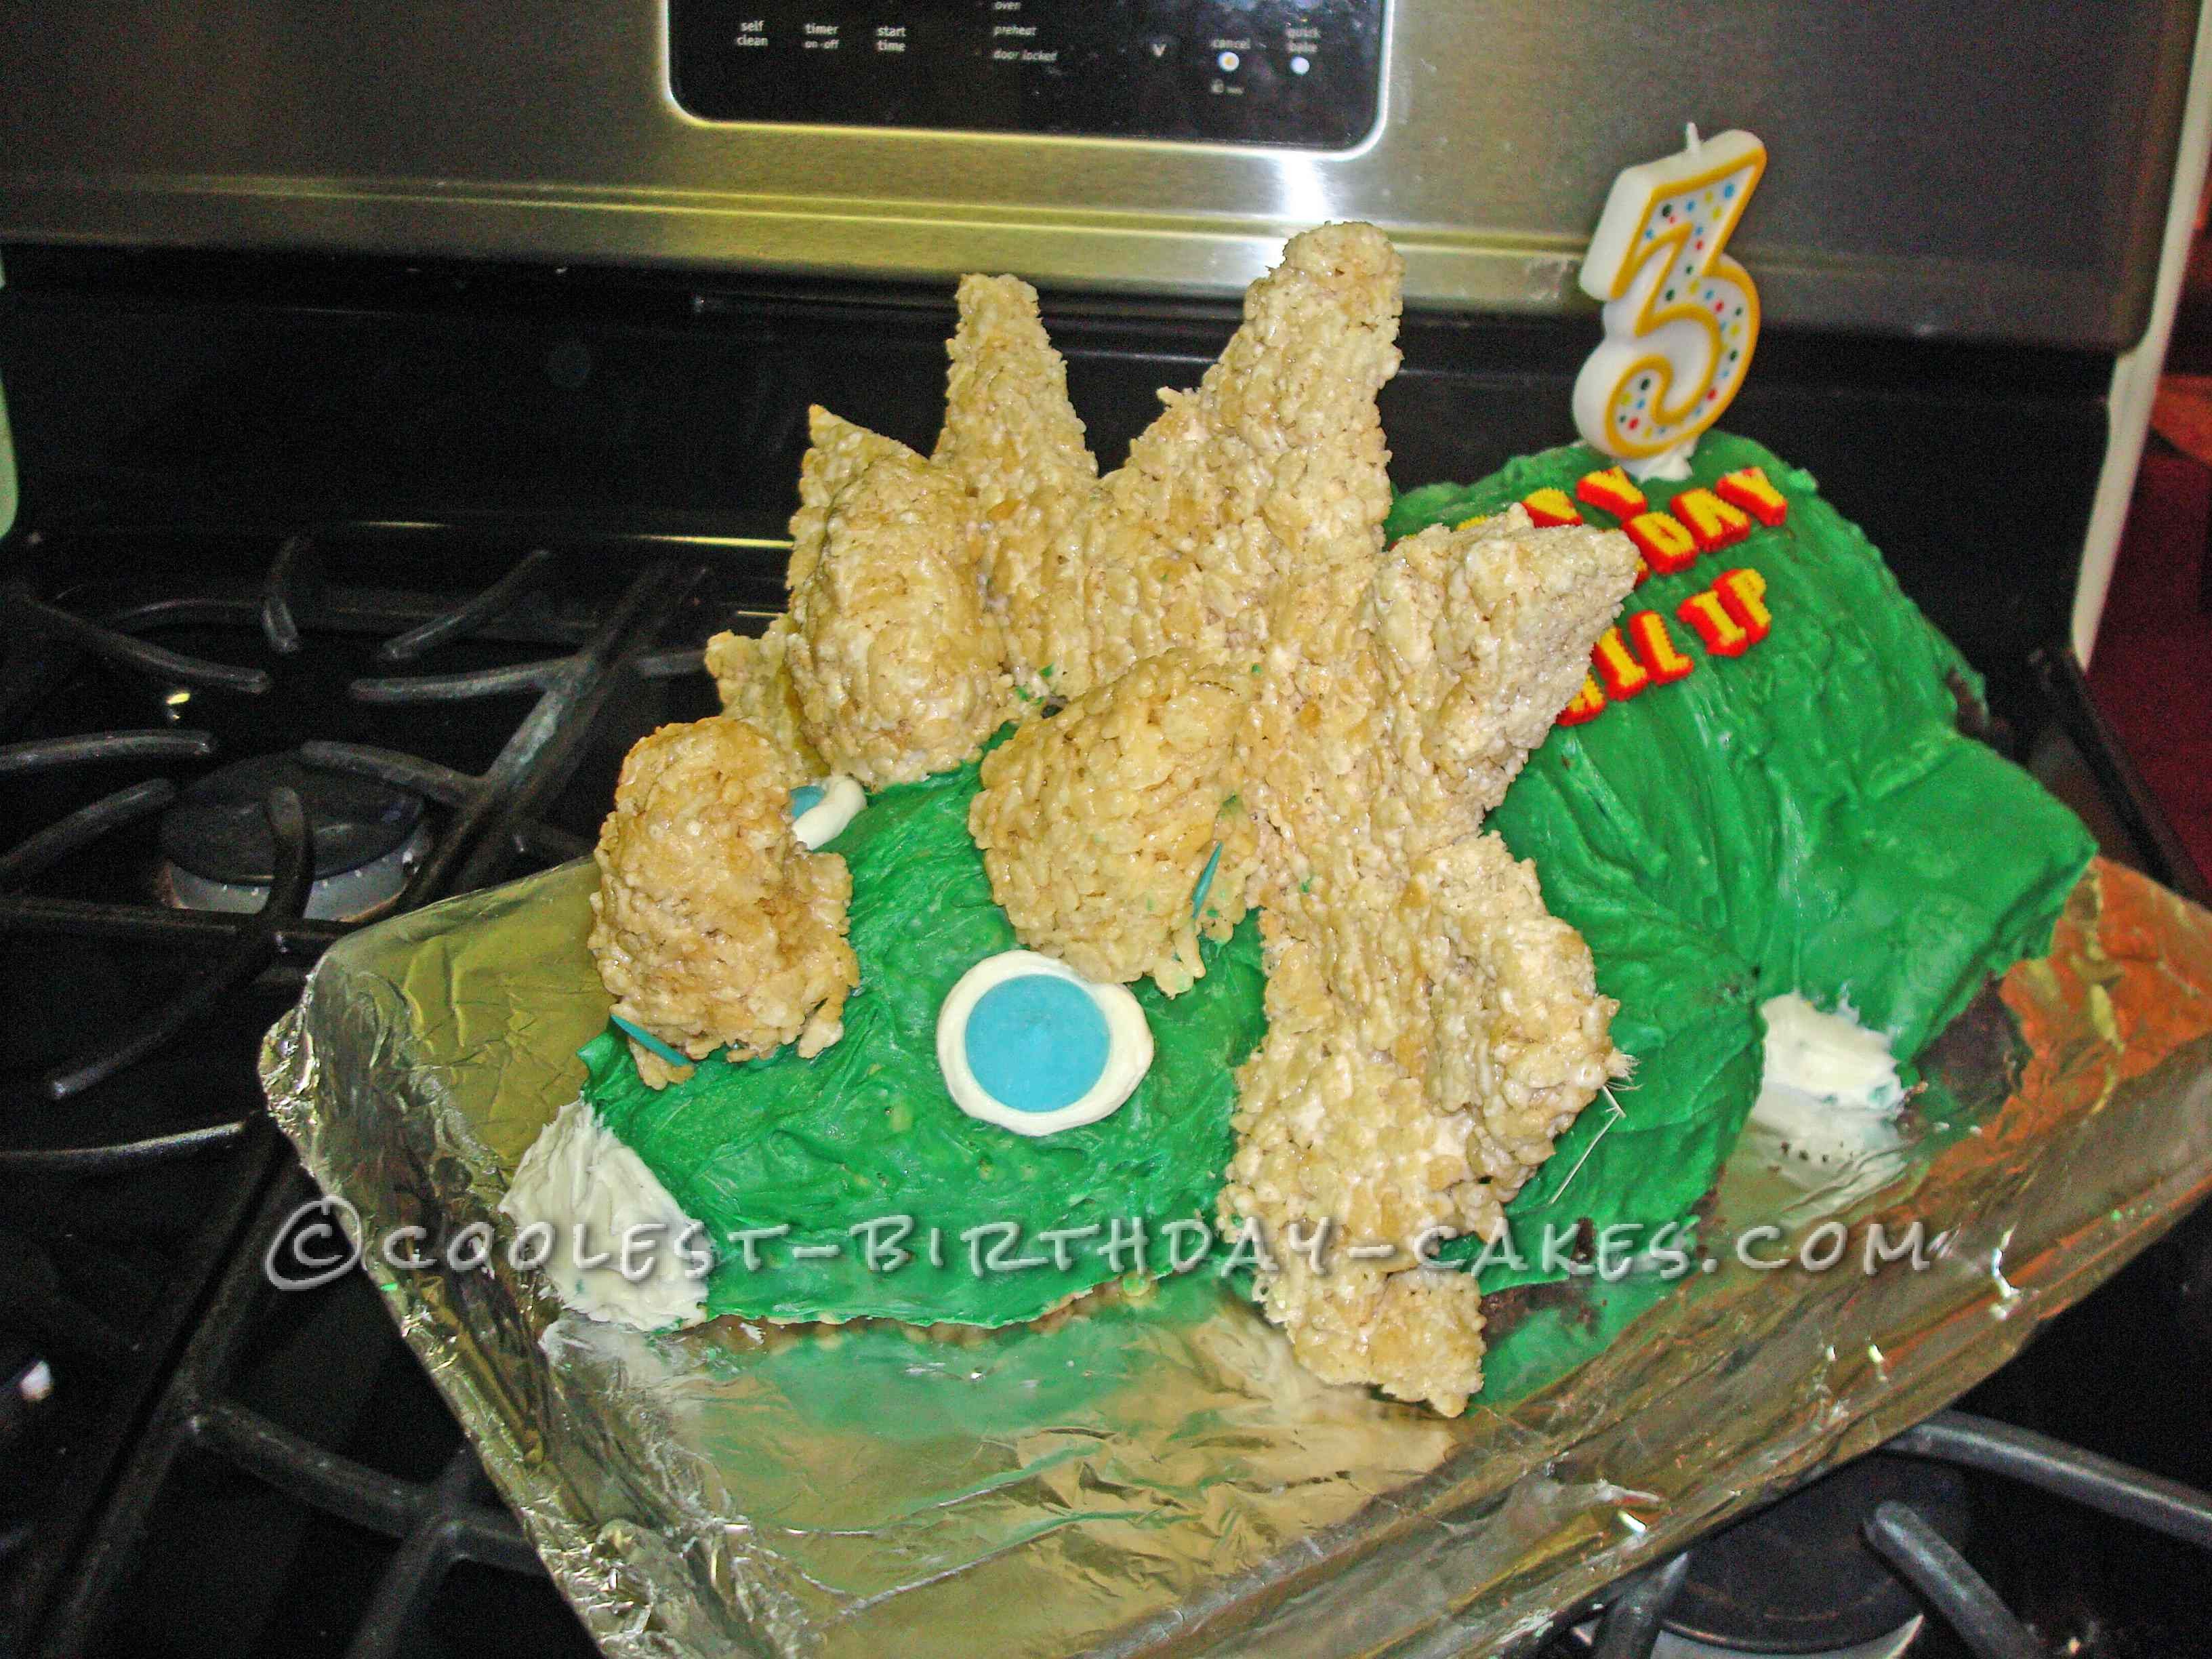 Coolest Stegosaurus Dinosaur Cake